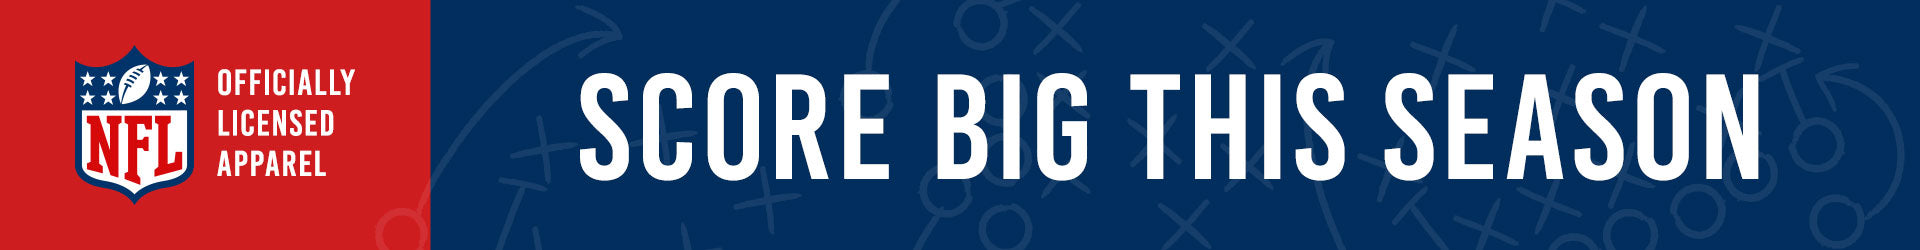 NFL officially licensed apparel. Score big this season desktop banner.